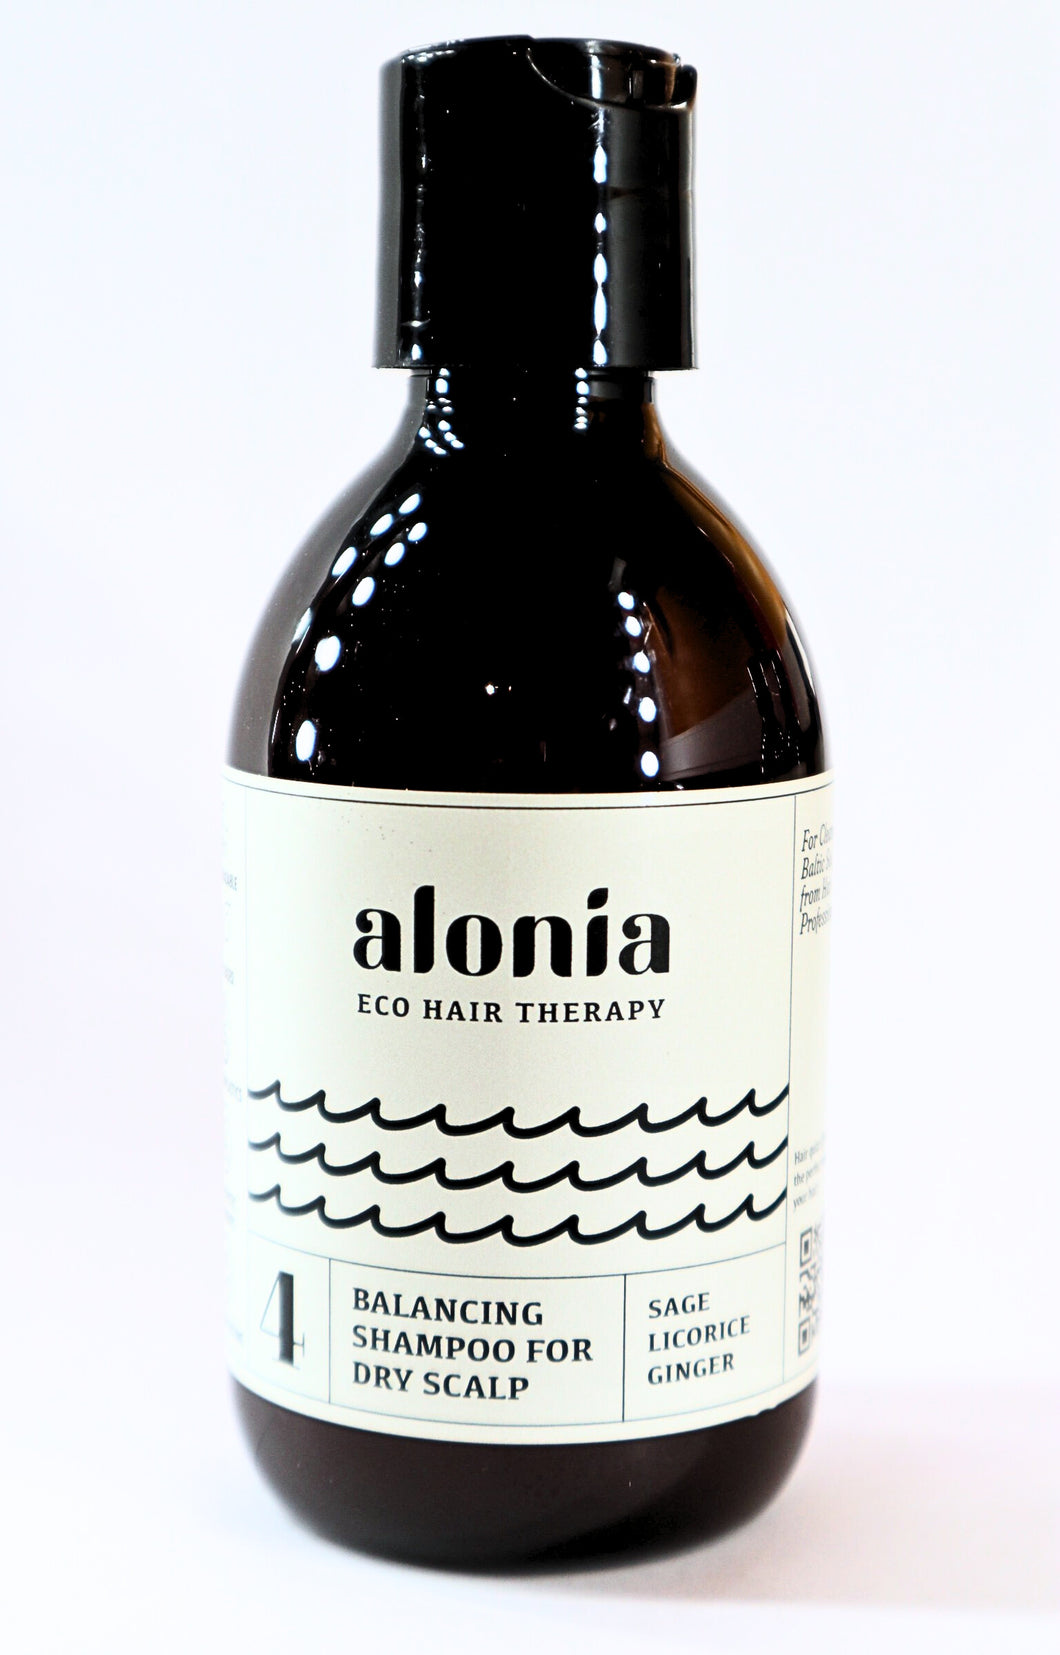 Alonia IV Balancing shampoo for dry scalp